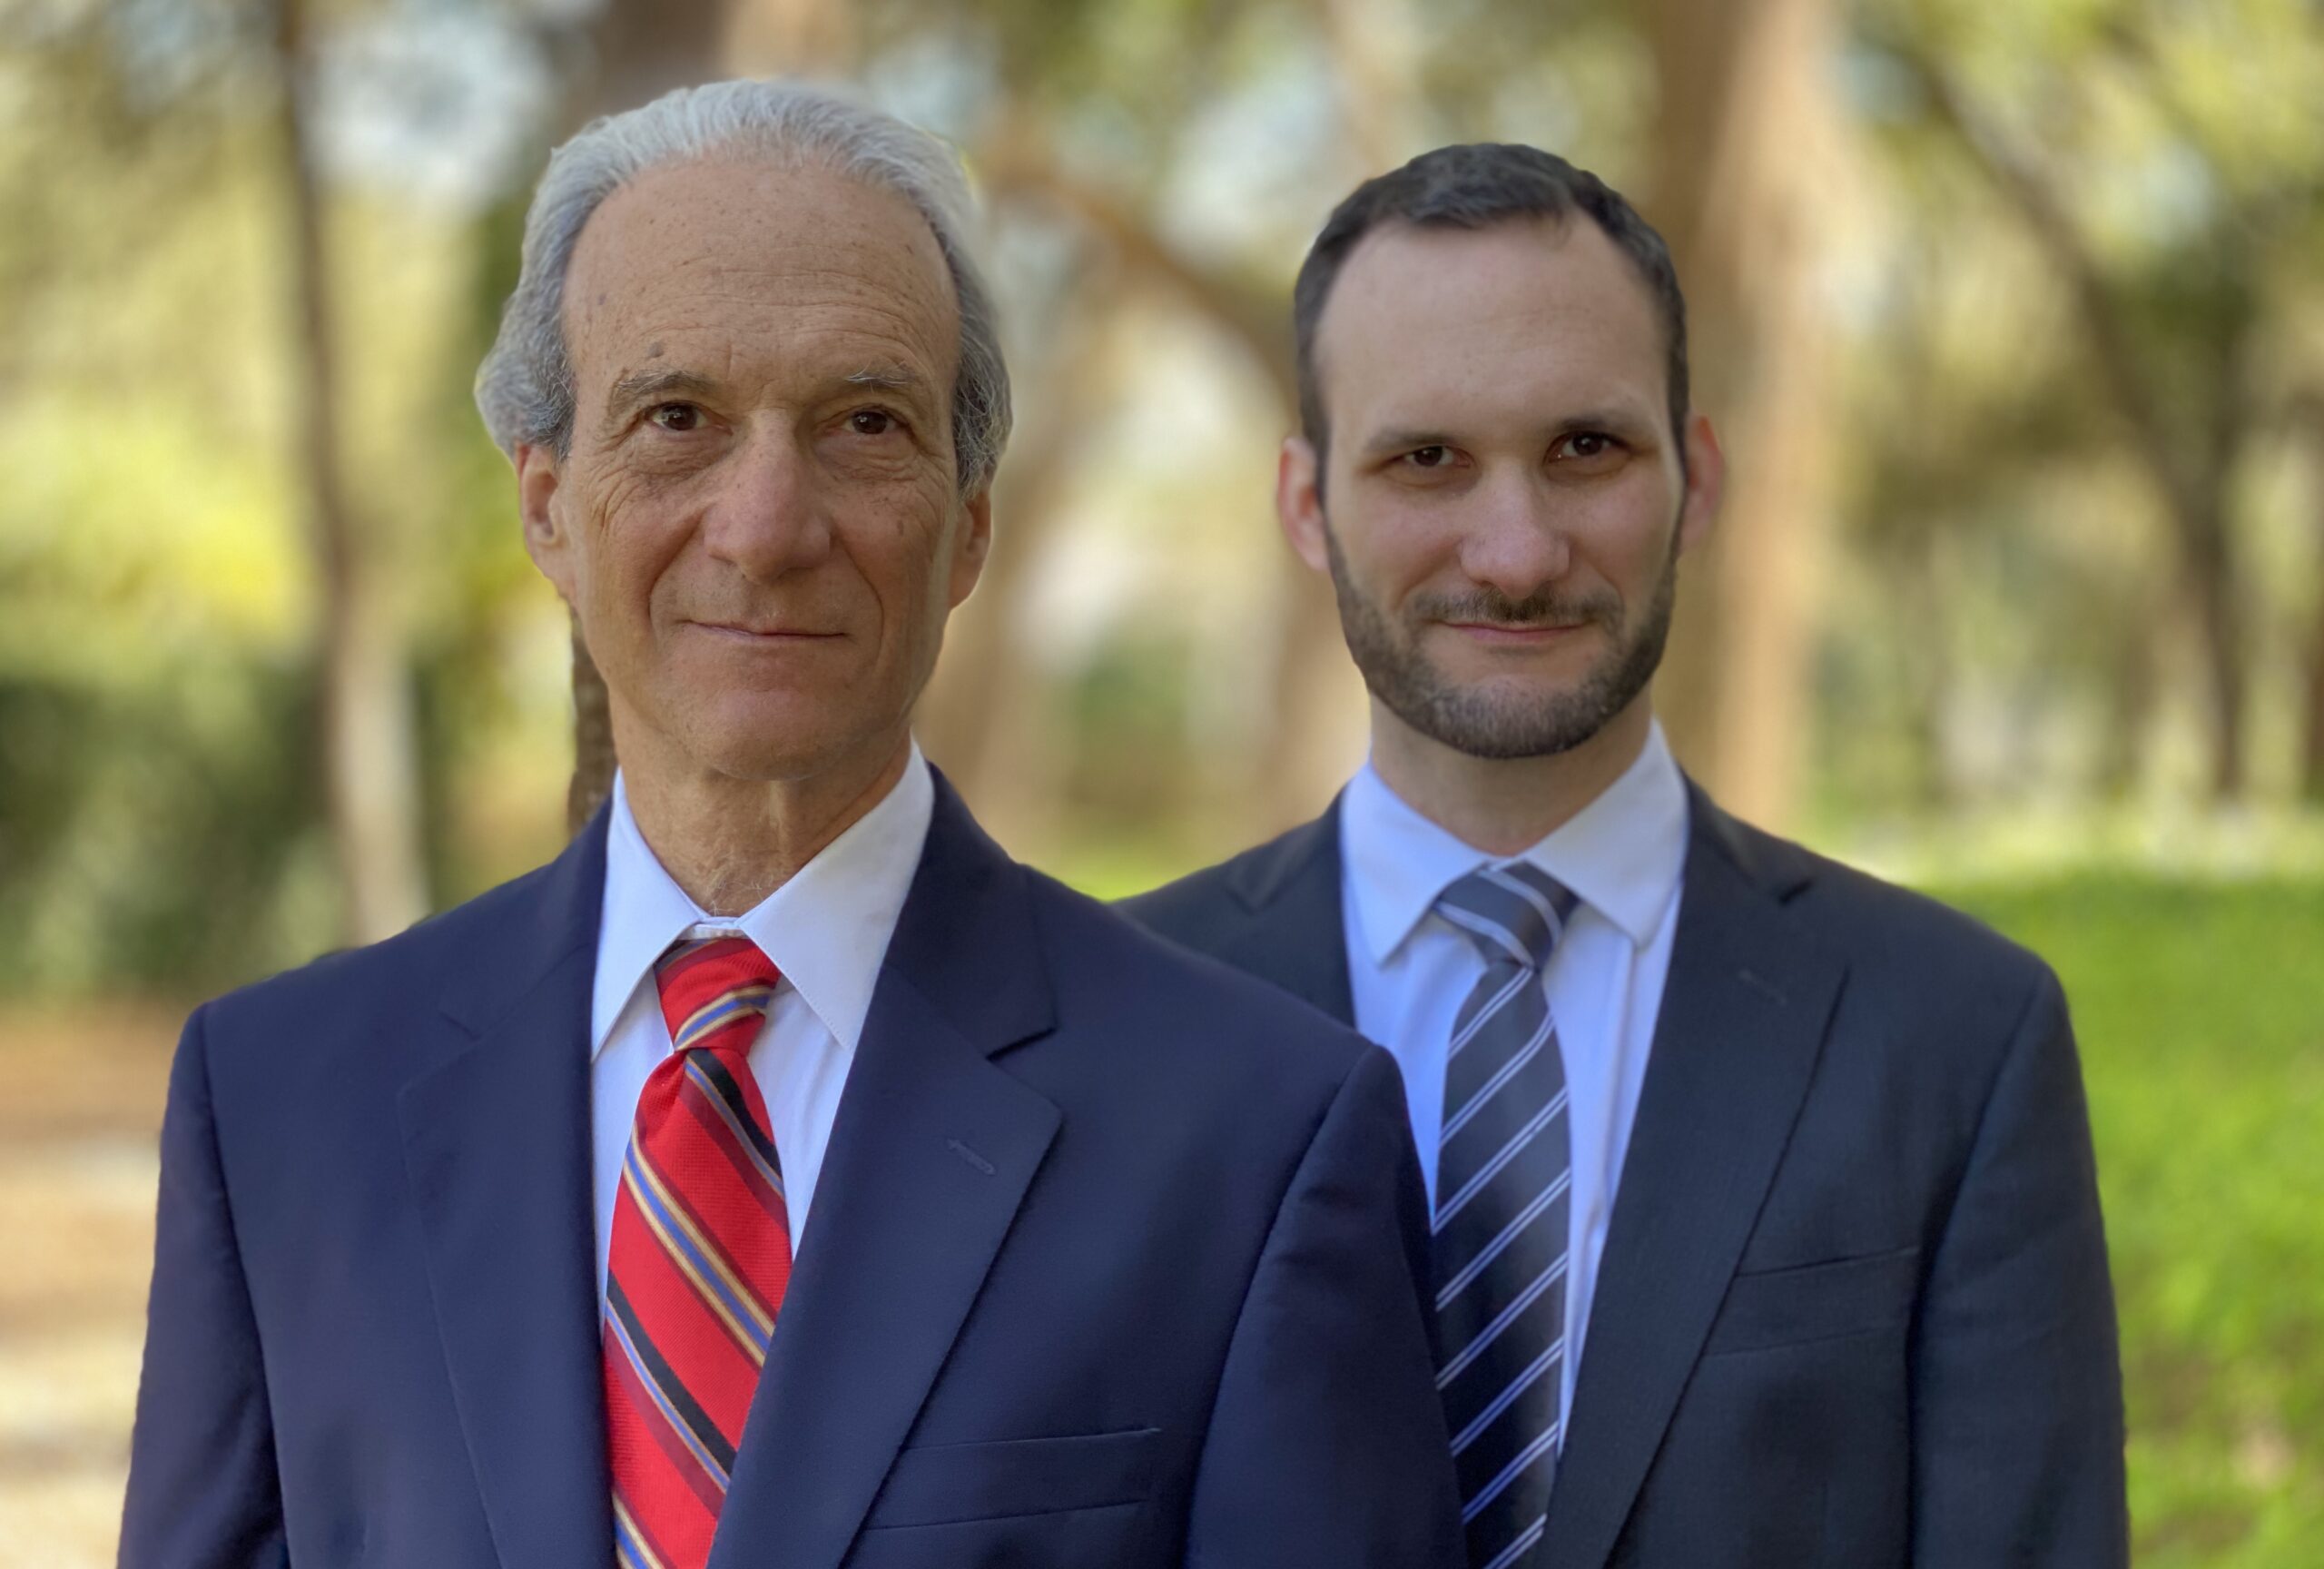 Florida asset protection attorneys Jon Alper and Gideon Alper, part of Alper Law